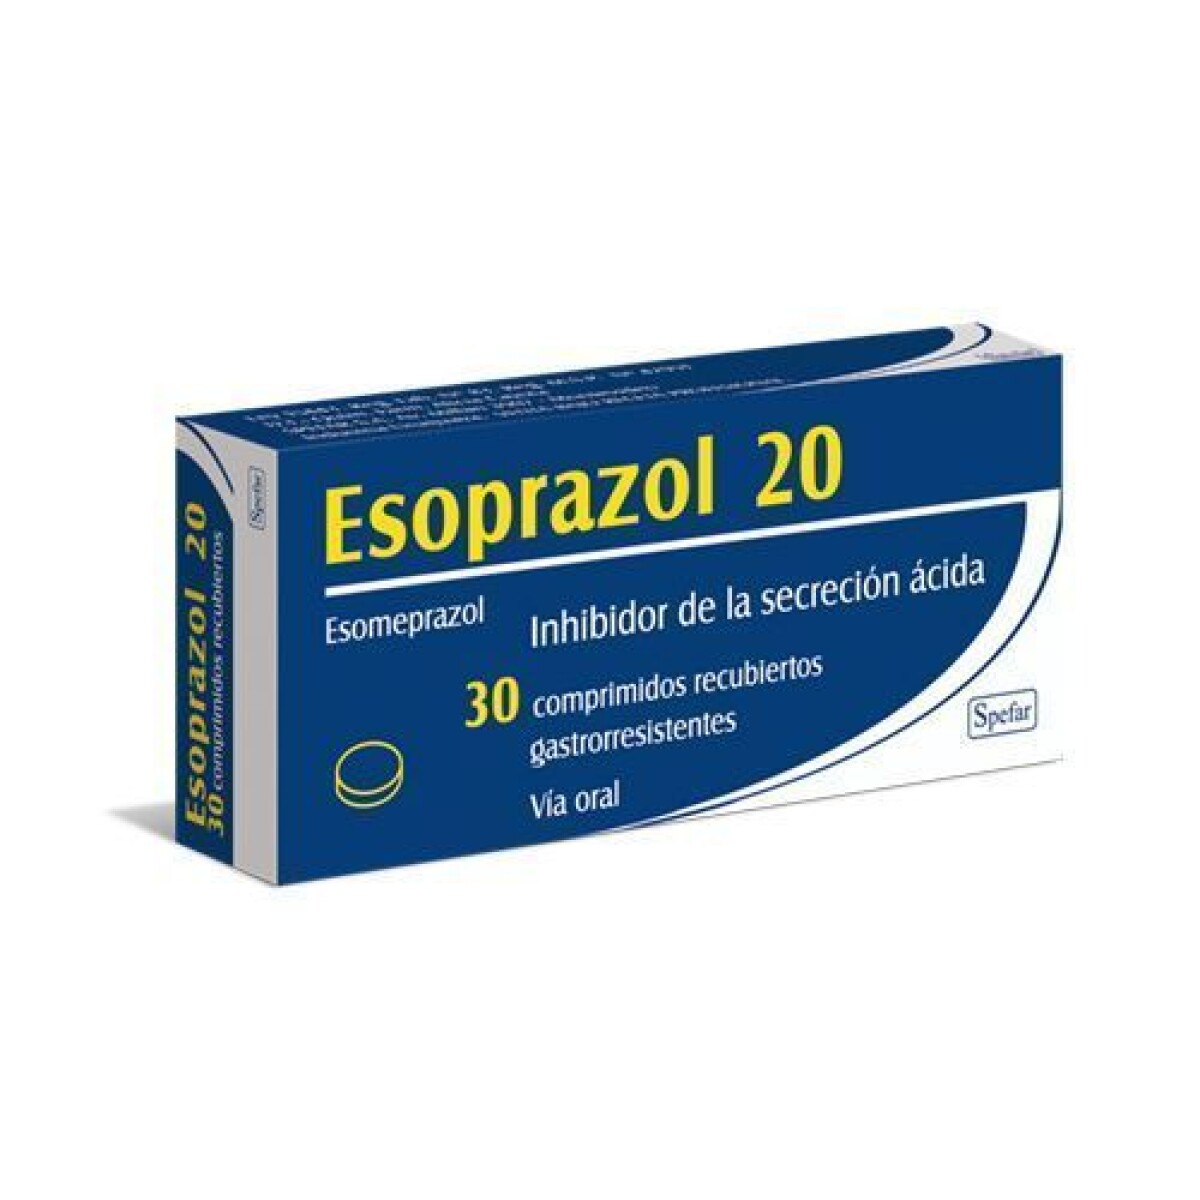 Esoprazol 20 Spefar 